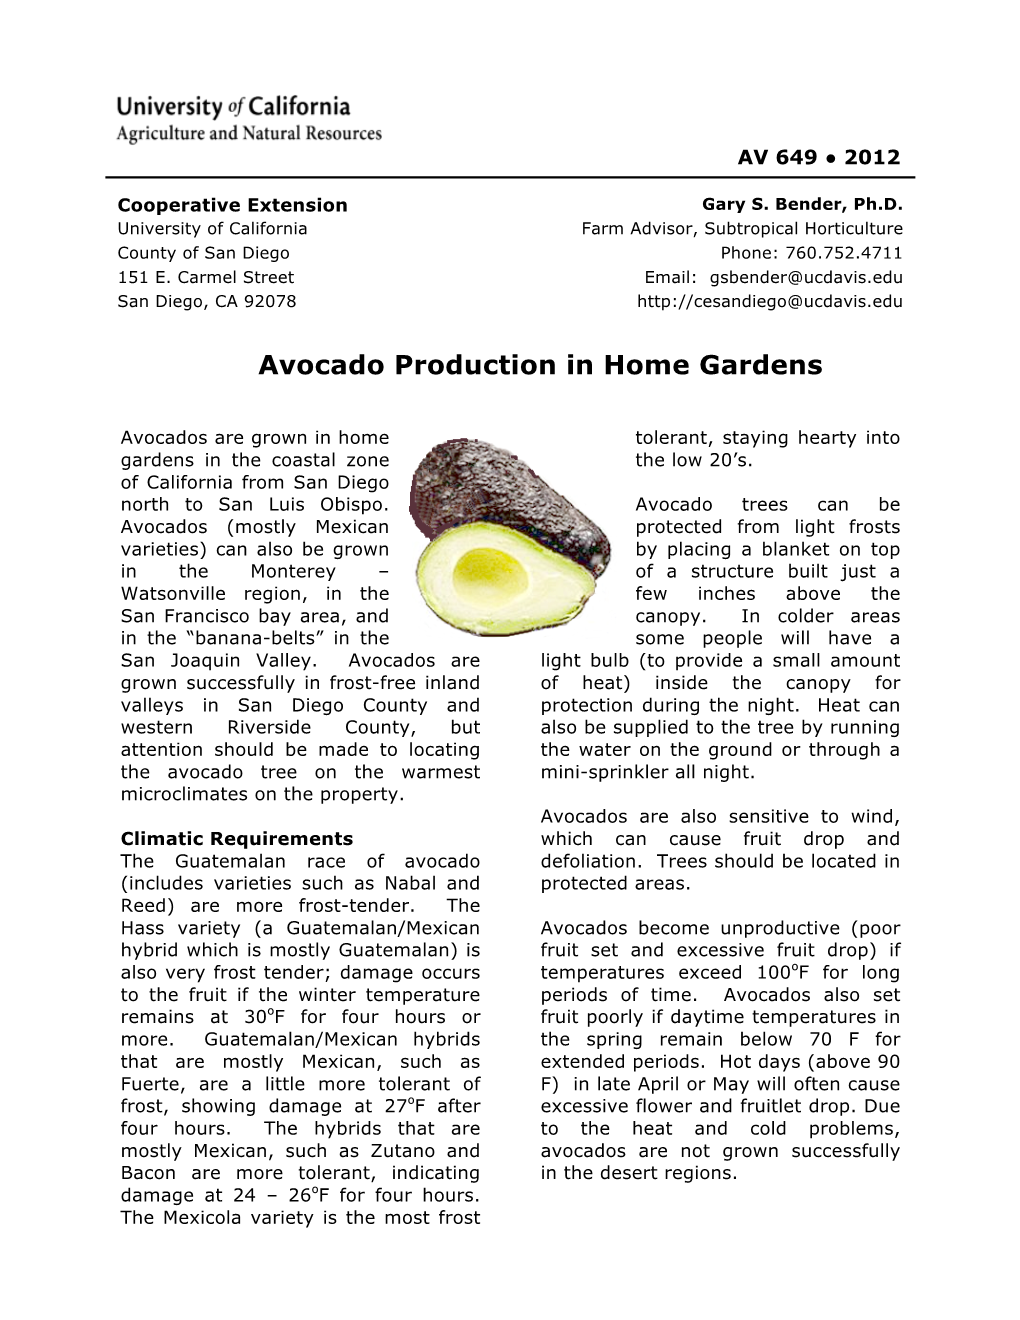 Avocado Production in Home Gardens